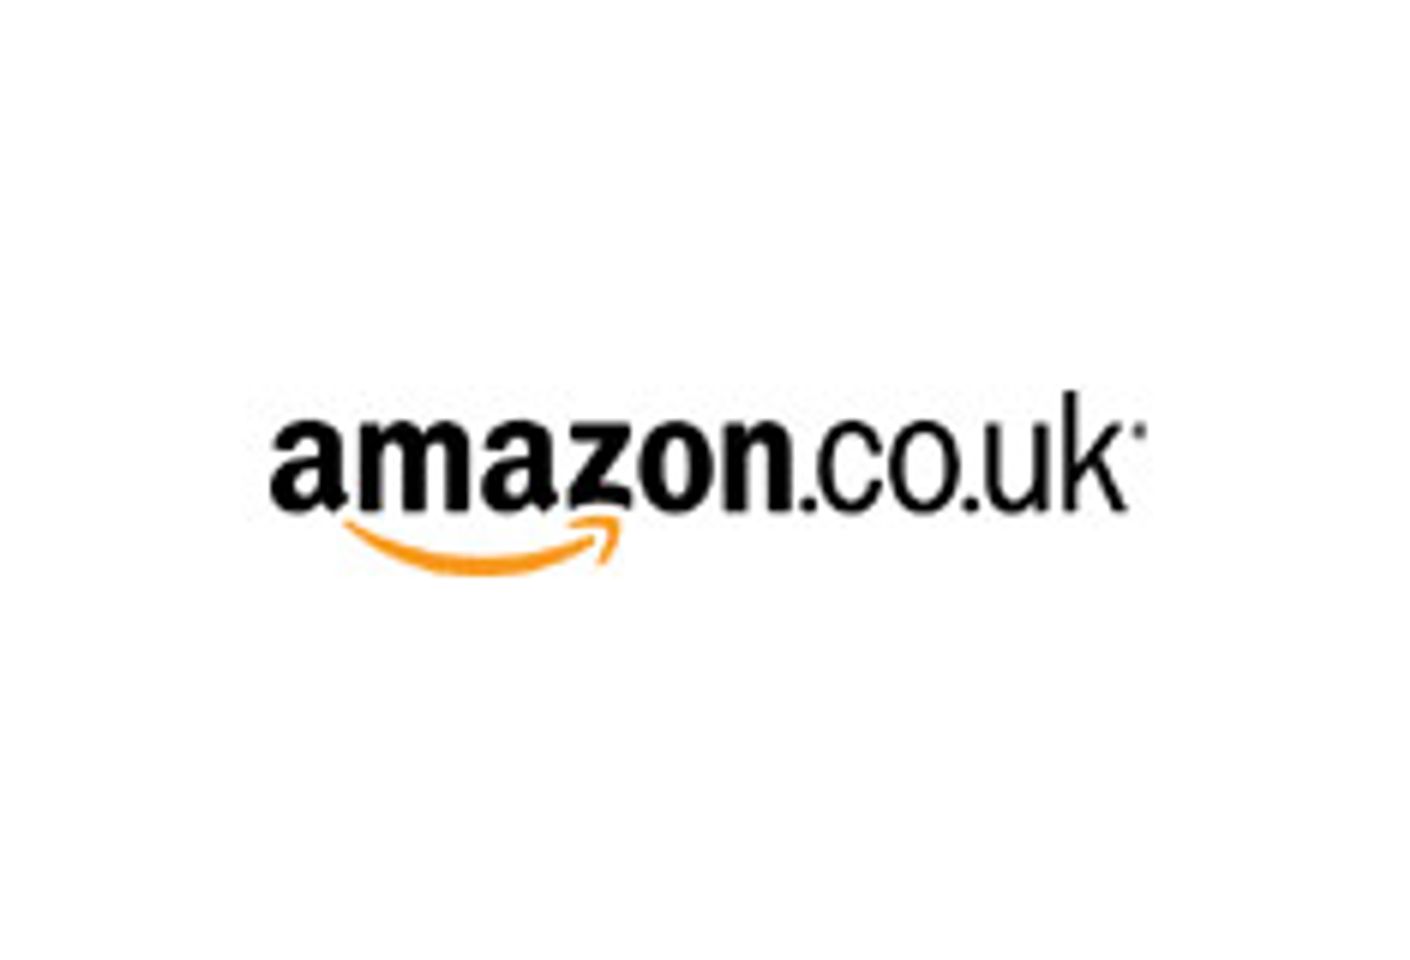 Amazon.com UK Selling Adult